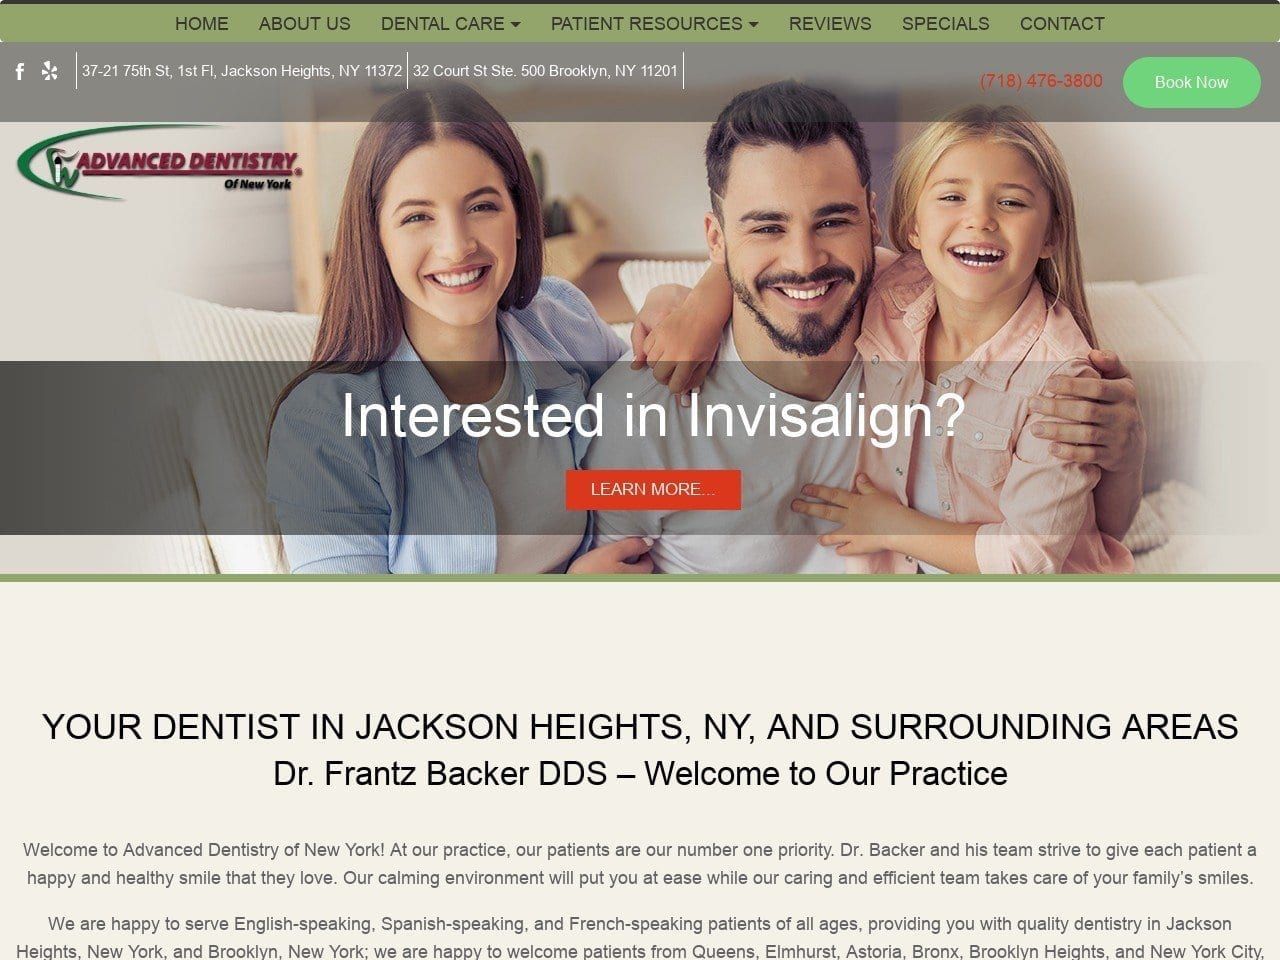 Advanced Dentistry of New York Website Screenshot from advanceddentistryofny.com